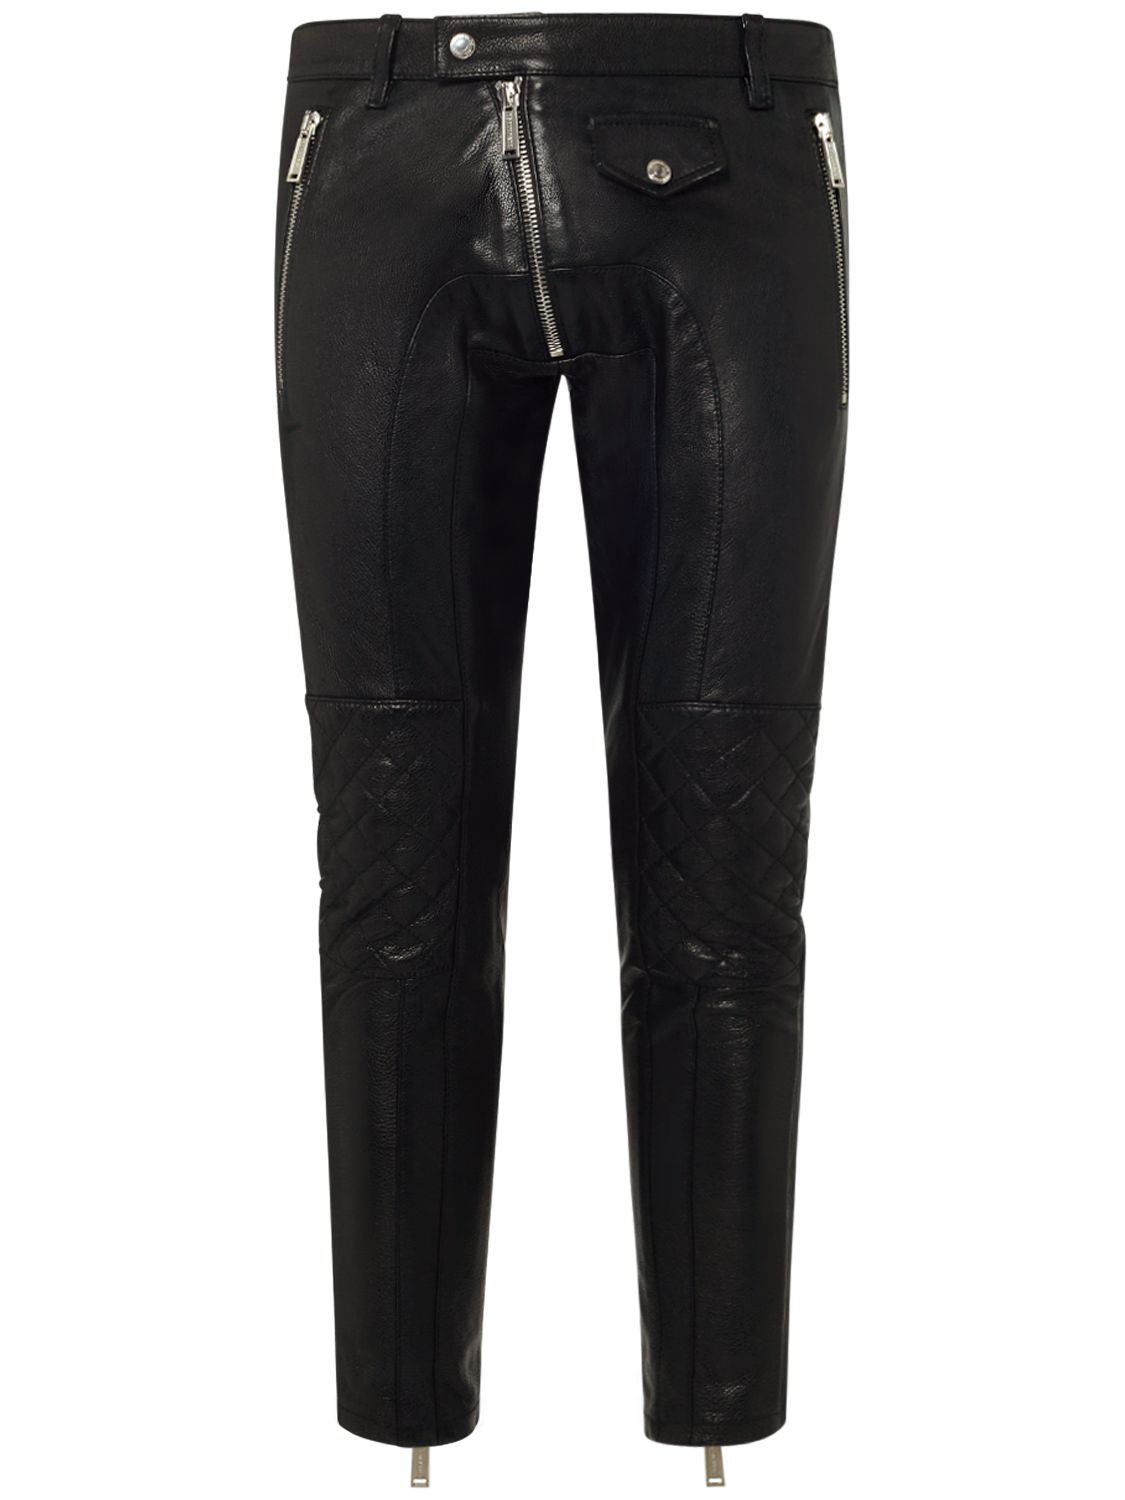 Sexy Biker Leather Pants